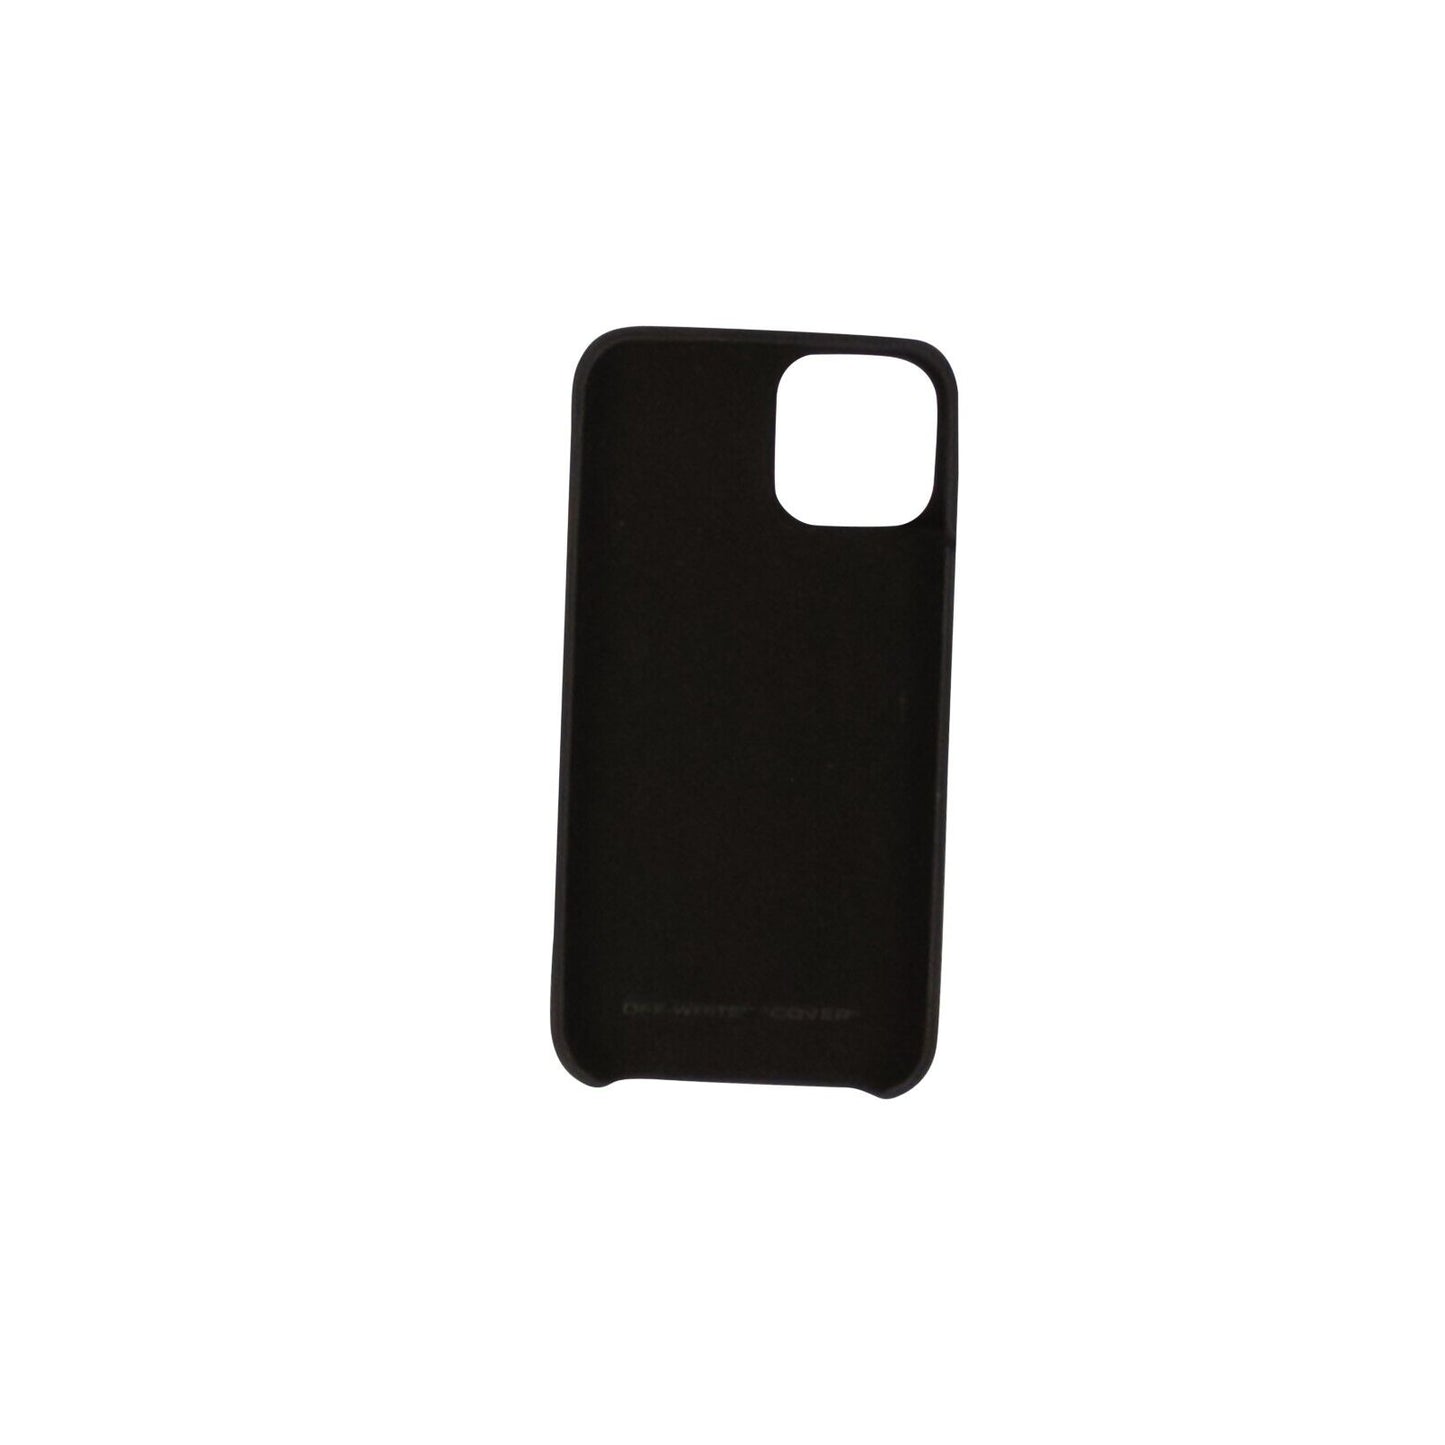 Off-White C/O Virgil Abloh Rainbow 11 Pro Iphone Case - Black/Multi